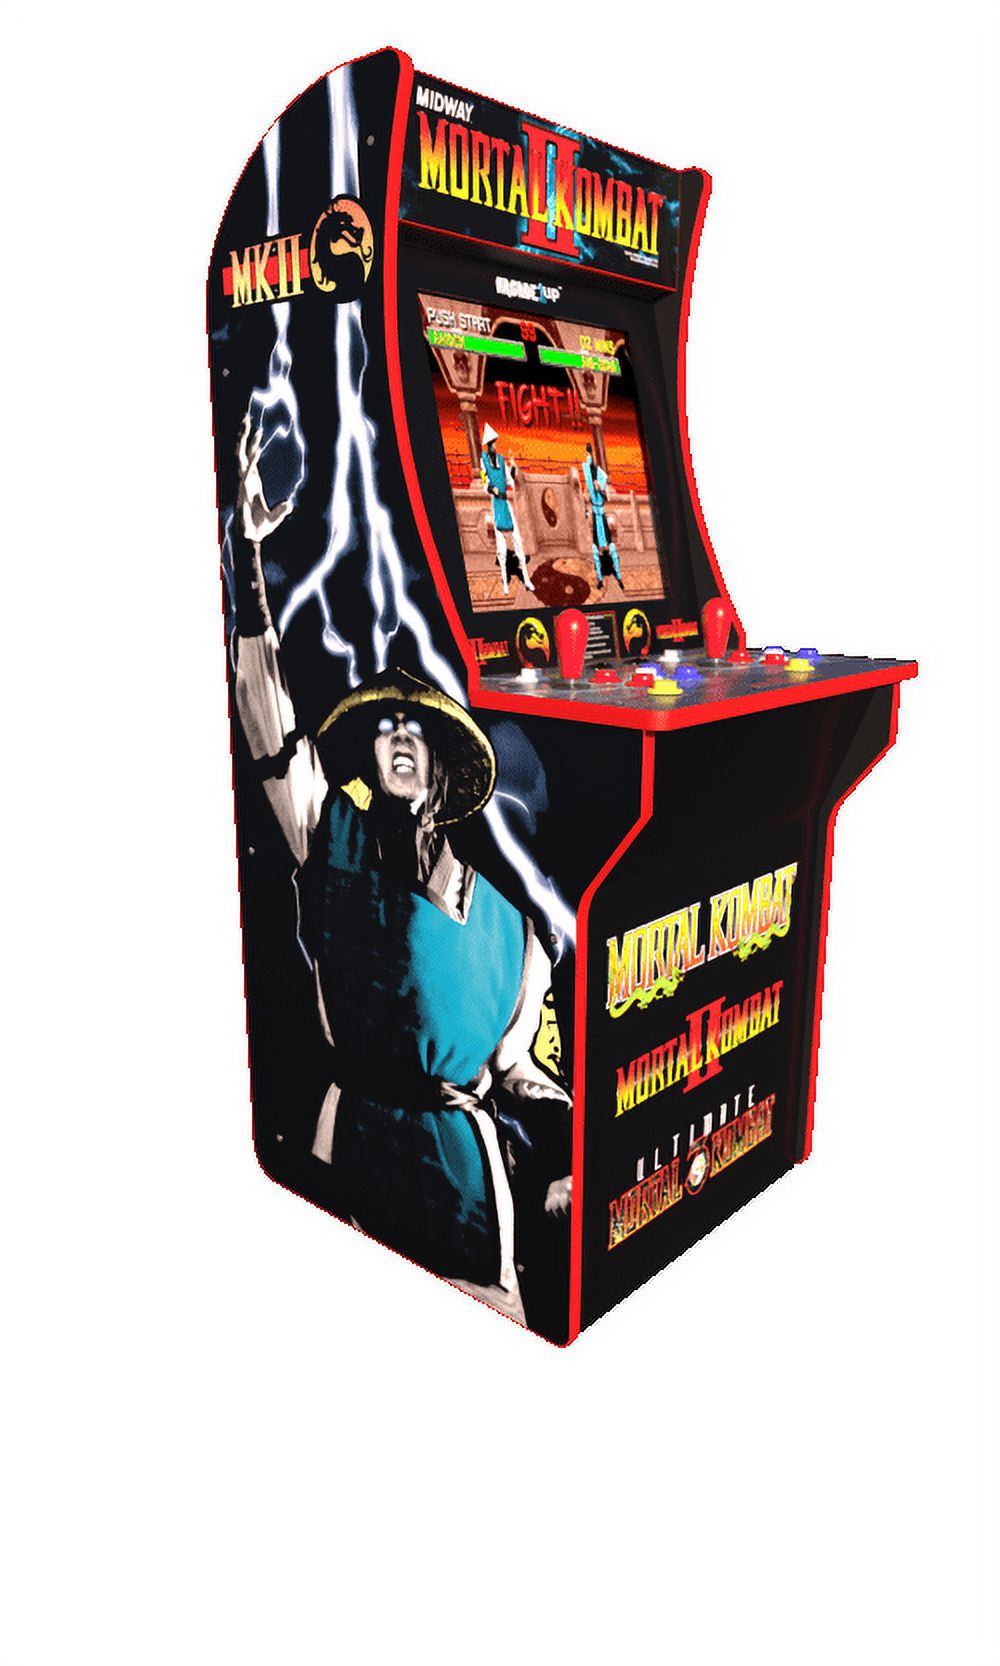 Mortal Kombat Arcade Machine w/ Riser, Arcade1UP (Includes Mortal Kombat I, II, III) - image 5 of 5